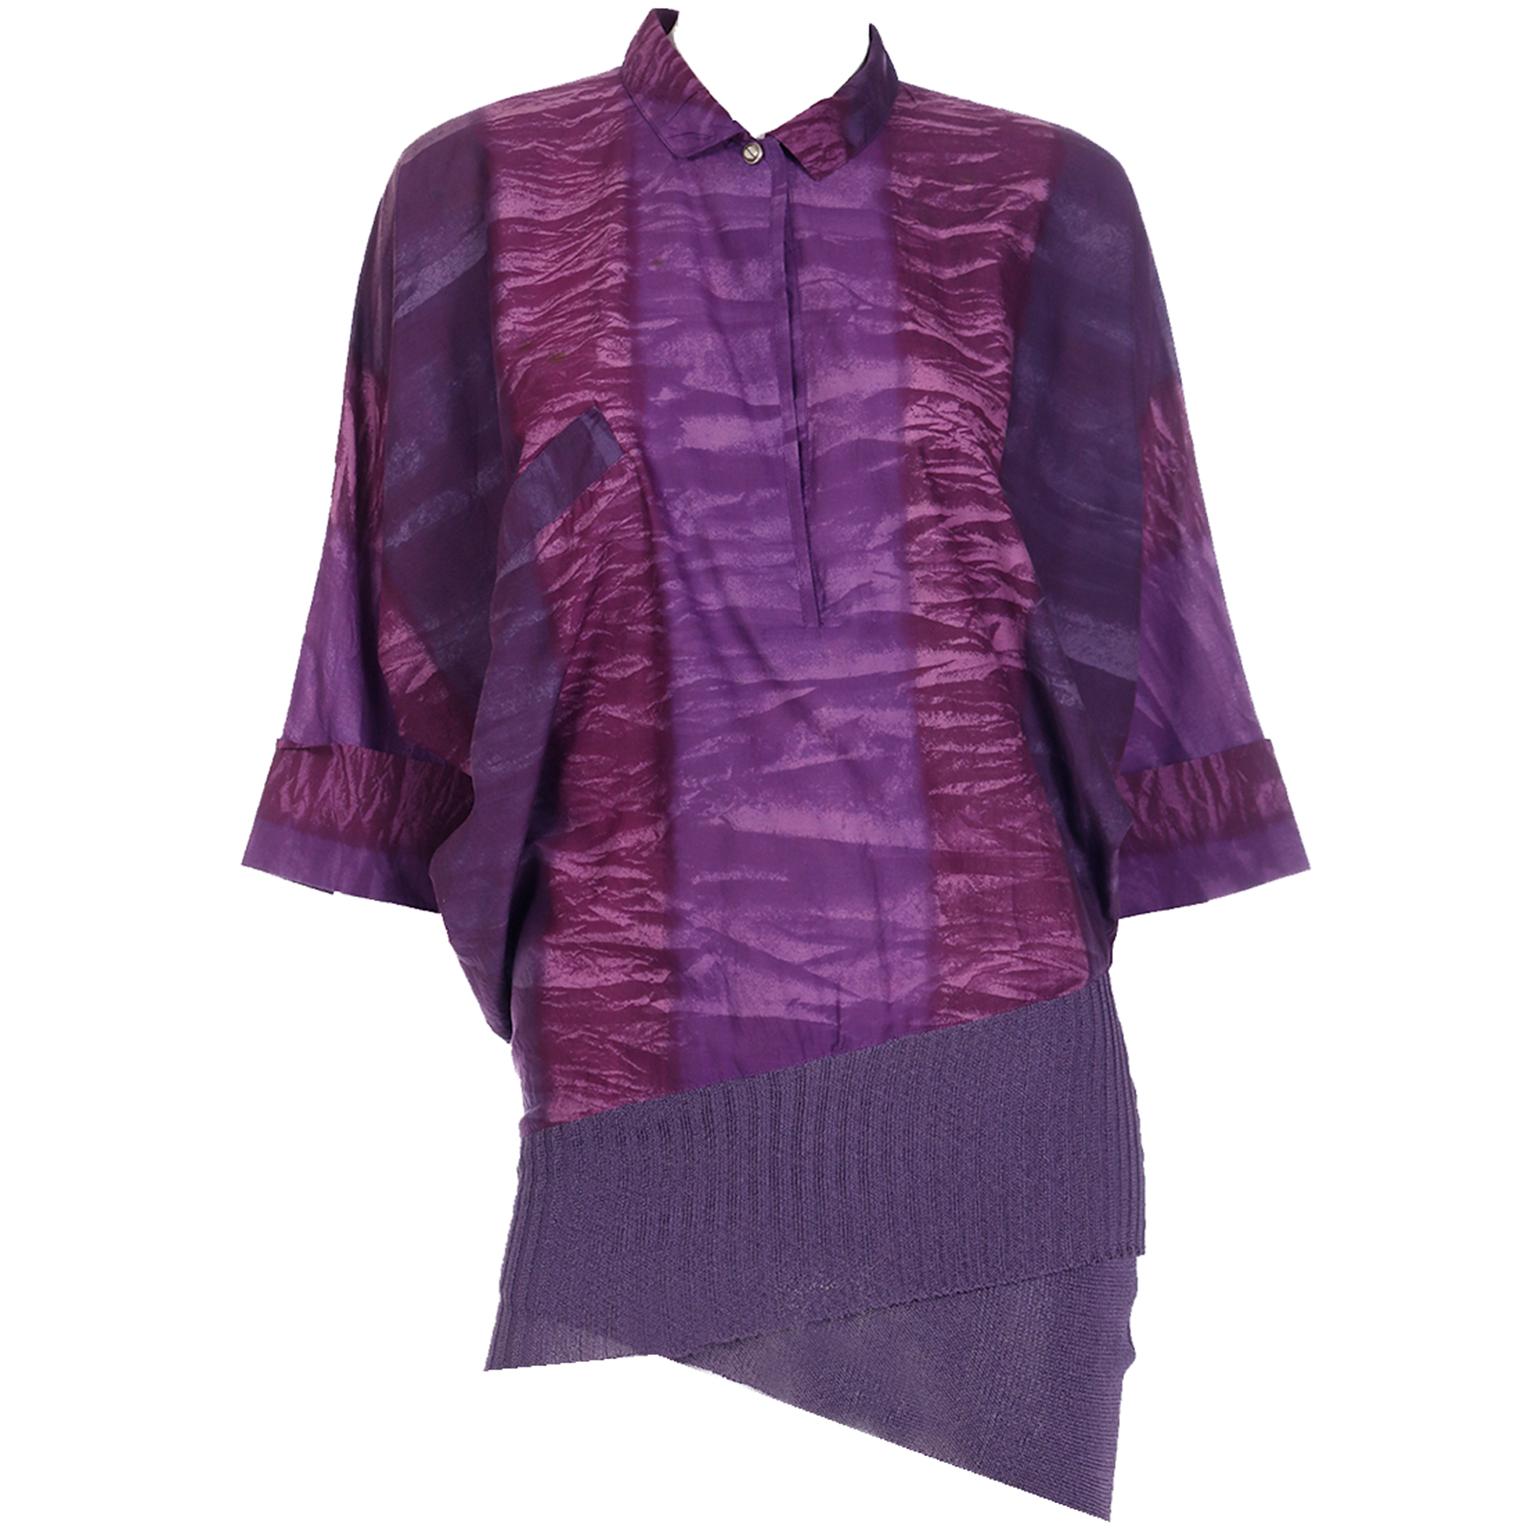 Gianni Versace 1980s Asymmetrical Top Purple Abstract Print Shirt w Knit Trim For Sale 7